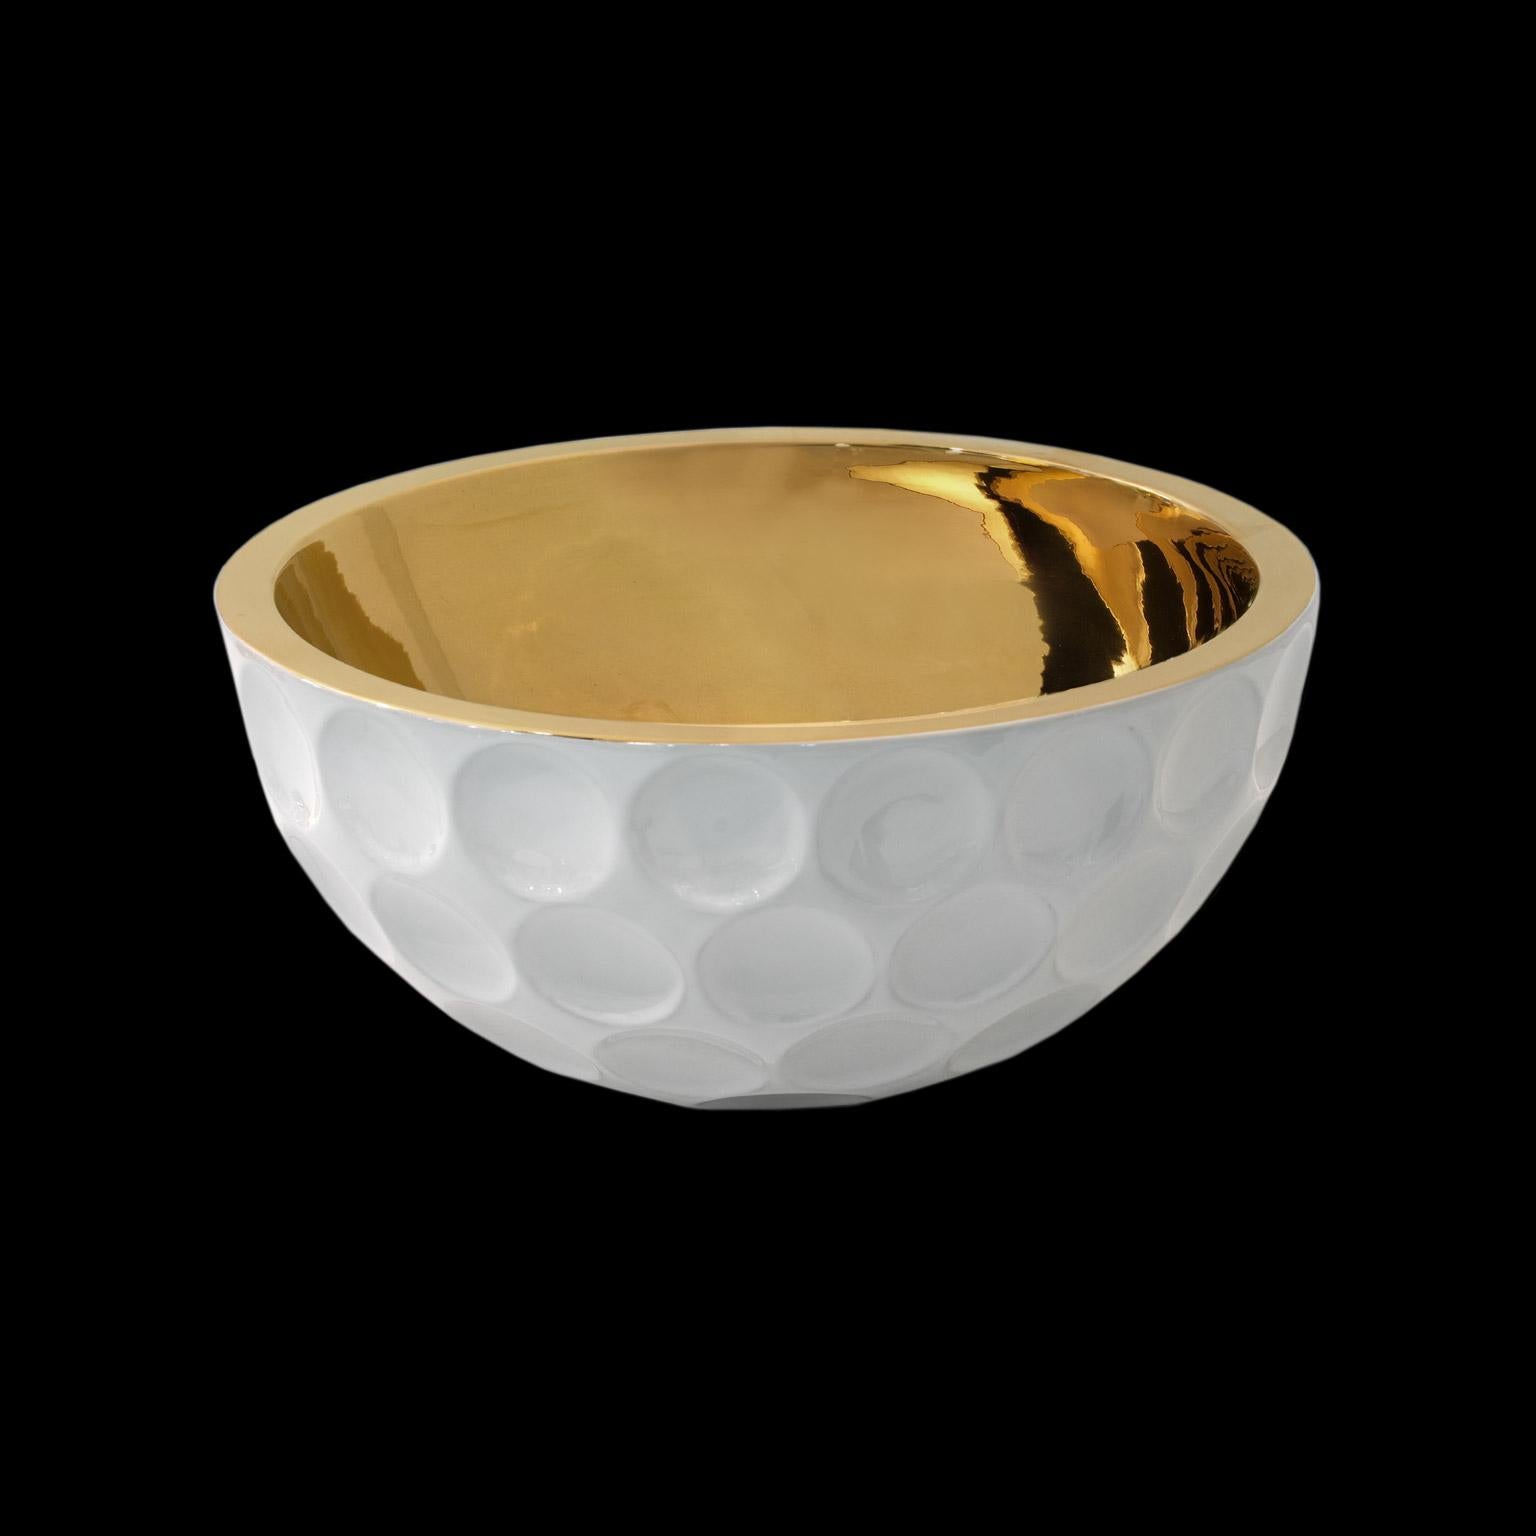 Ceramic golf bowl EAGLE handcrafted in 24-karat gold inside 
white glazed outside

cod. HB040 
measures: Height 20.0 cm. - Diameter 40.0 cm.